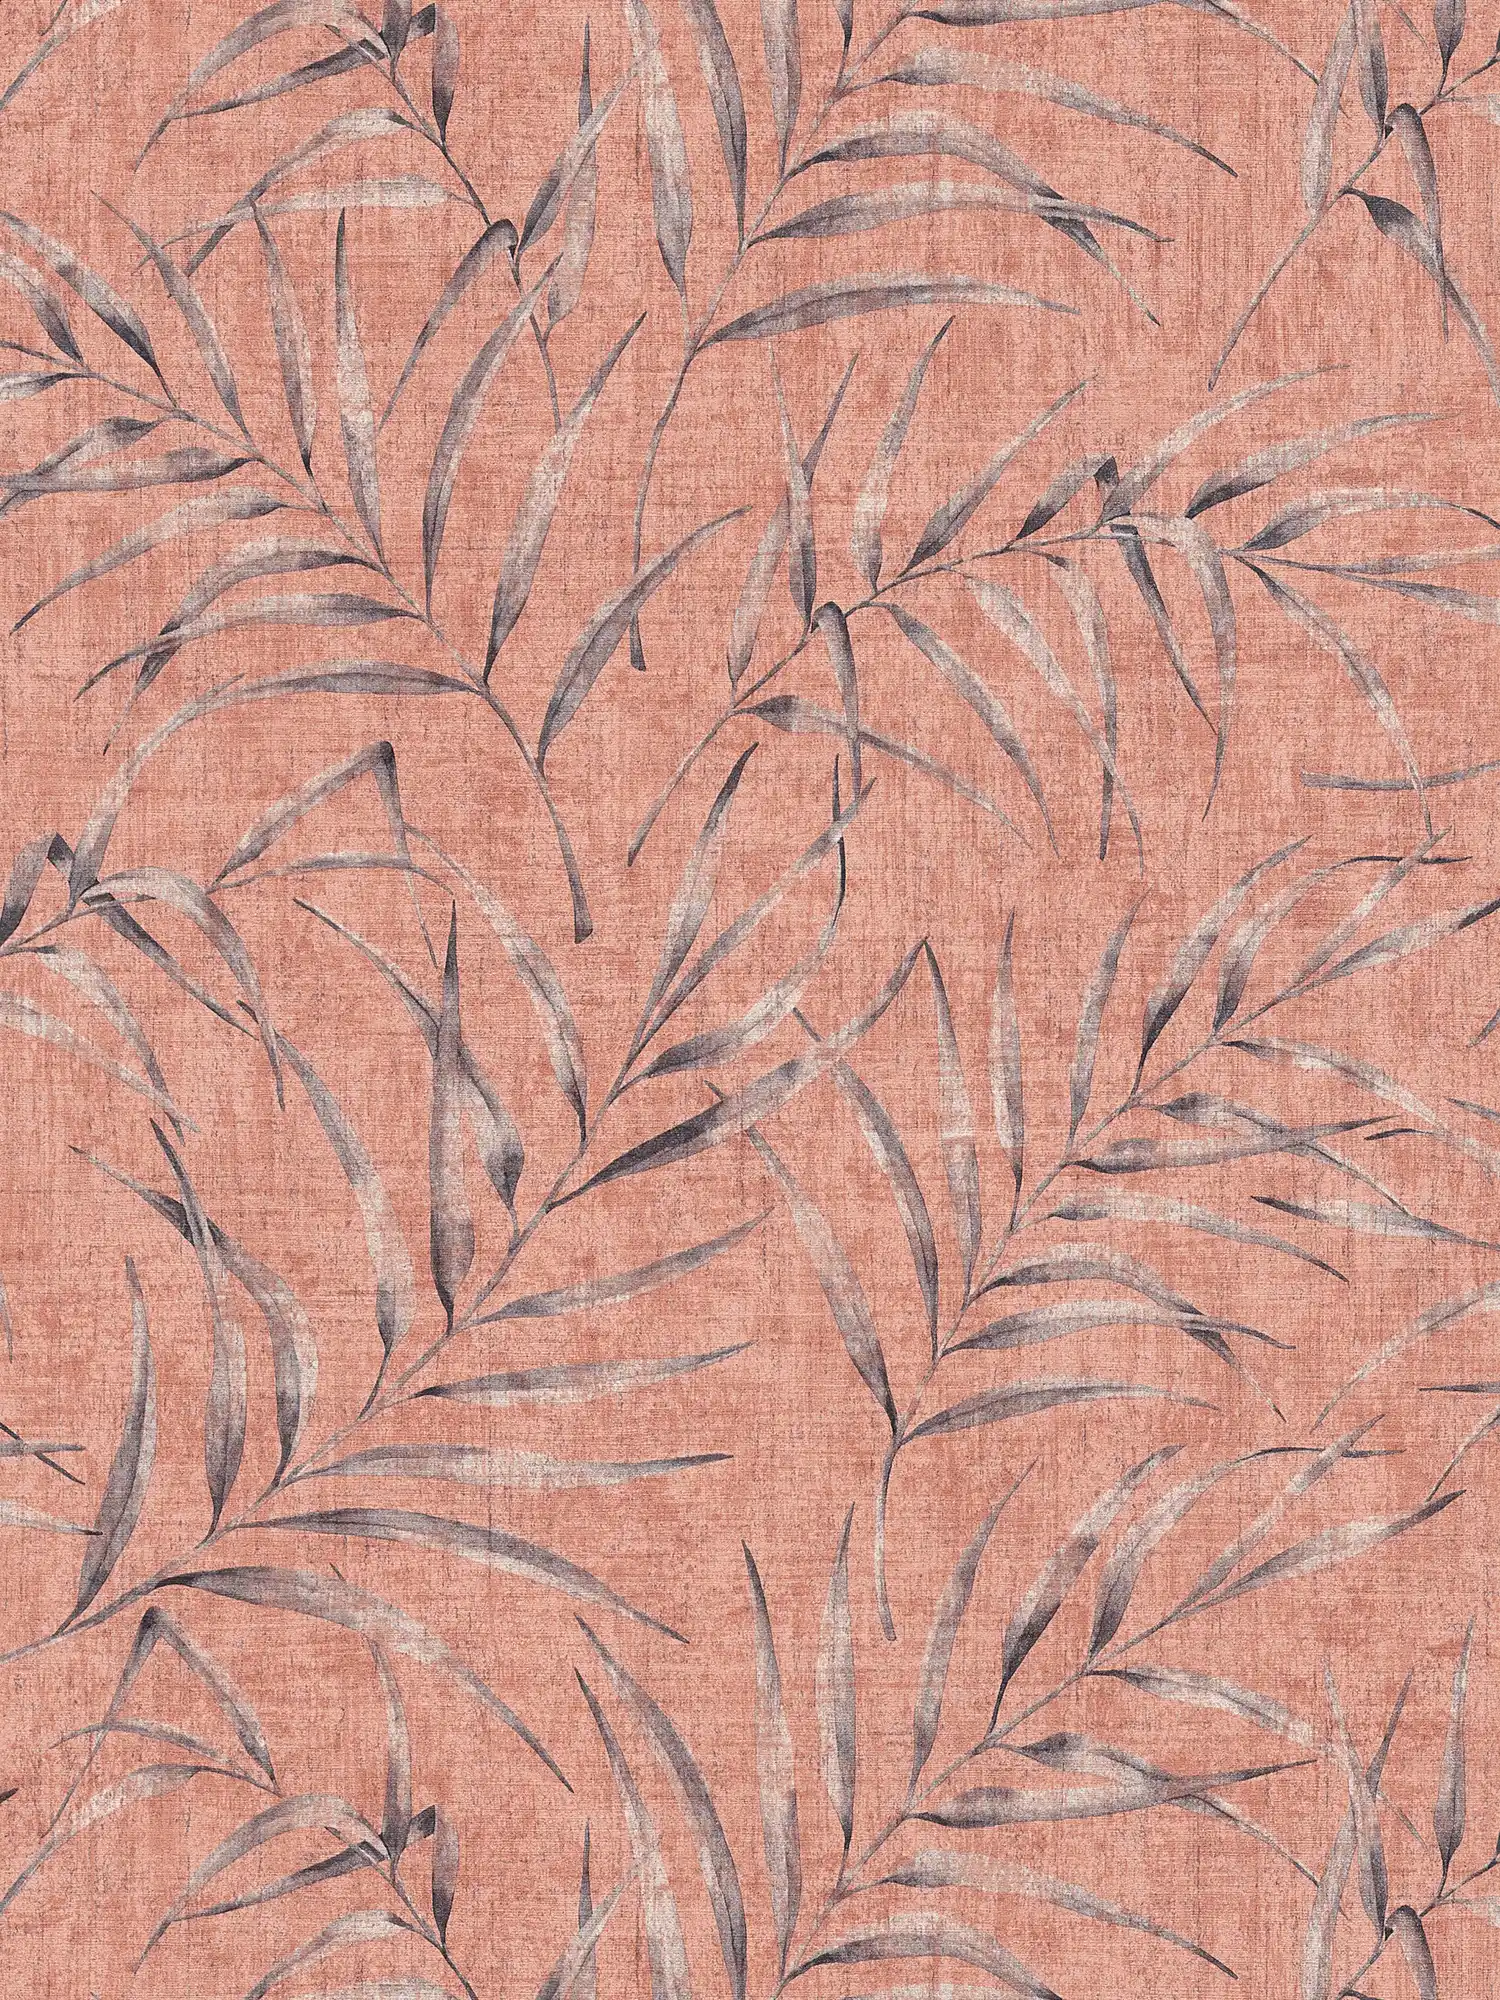 Wallpaper leaf pattern & linen look - pink, orange, red
